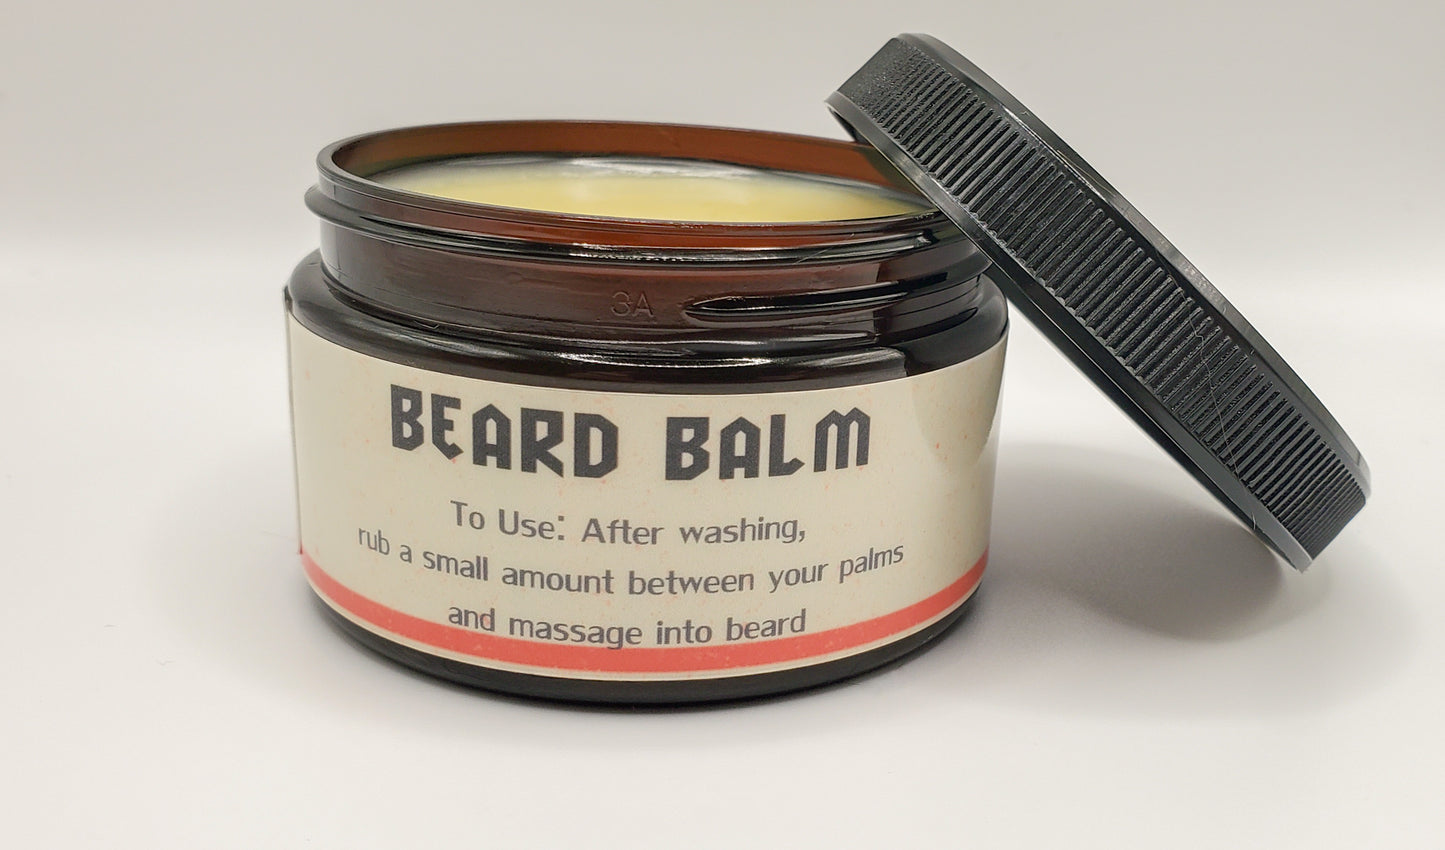 Heathen Beard Grooming Set // Beard Oil Beard Balm Beard Shampoo // Bergamot and Cedarwood Scented